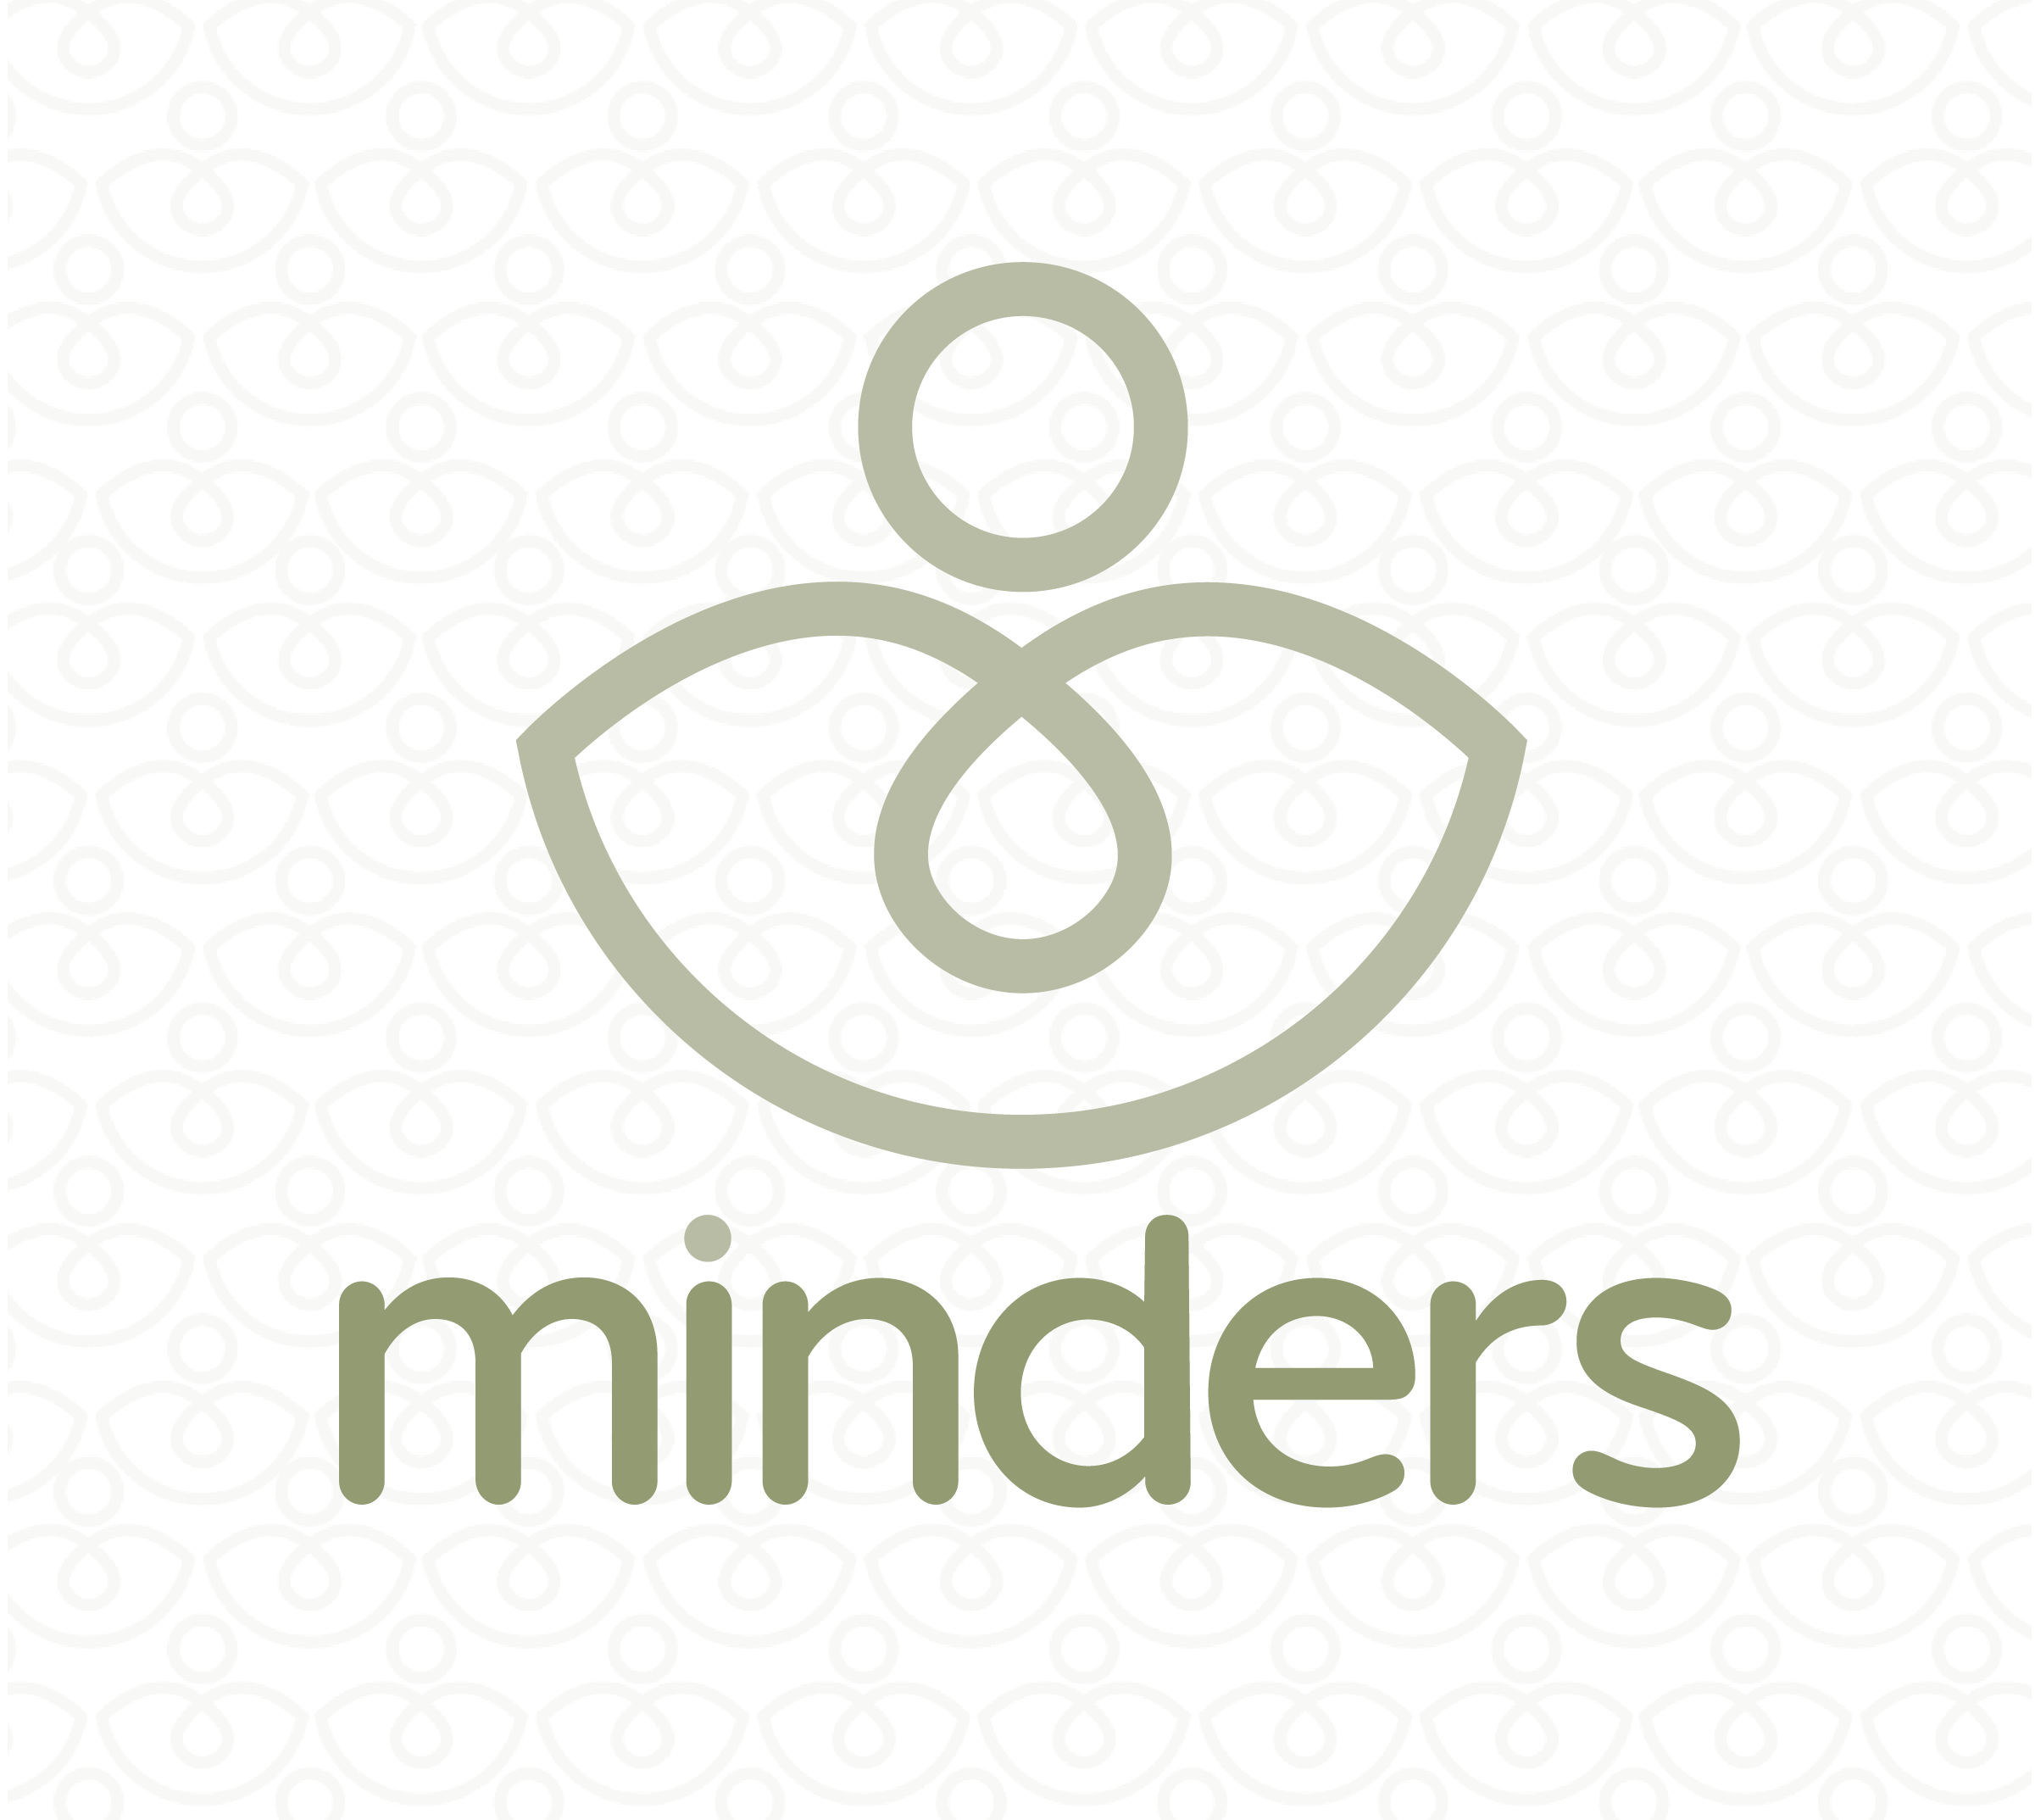 Minders logo